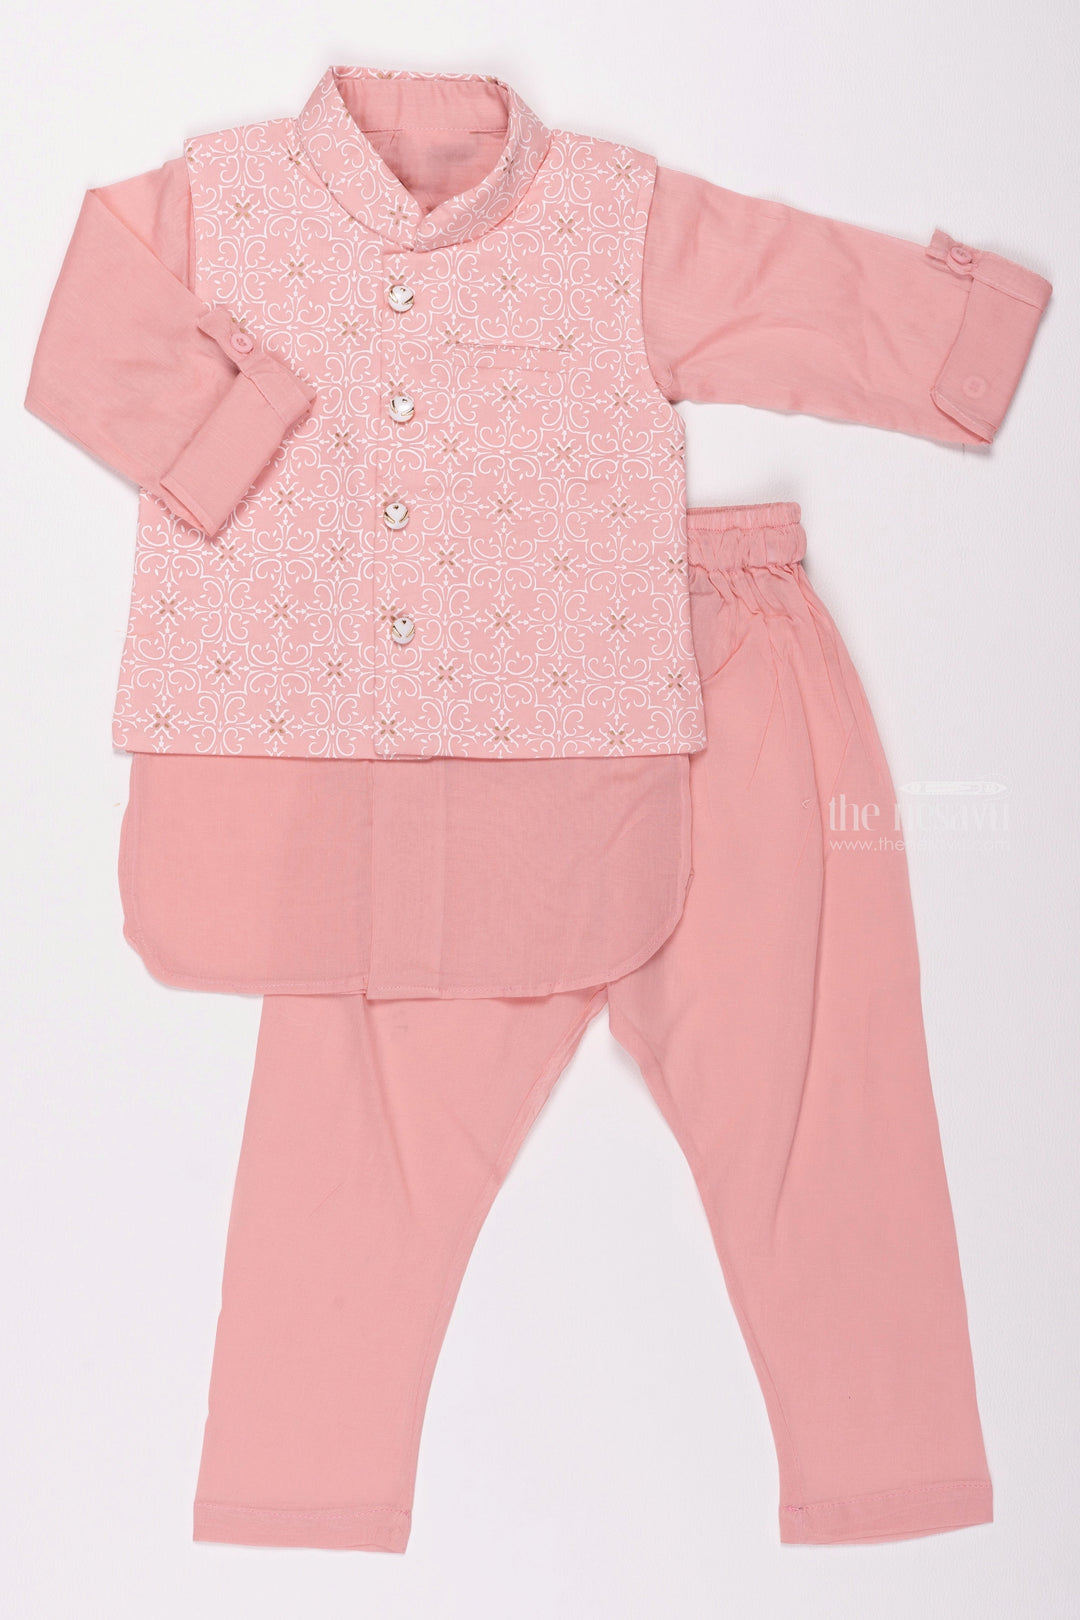 The Nesavu Boys Jacket Sets Pink Panache: Elegant Tile Print Overcoat & Pink Kurta with Pant Ensemble for Boys Nesavu 12 (3M) / Pink / Cotton BES392A-12 Boys Ethnic Kurta Pant Set | Premium Kurta Pant Collection | The Nesavu